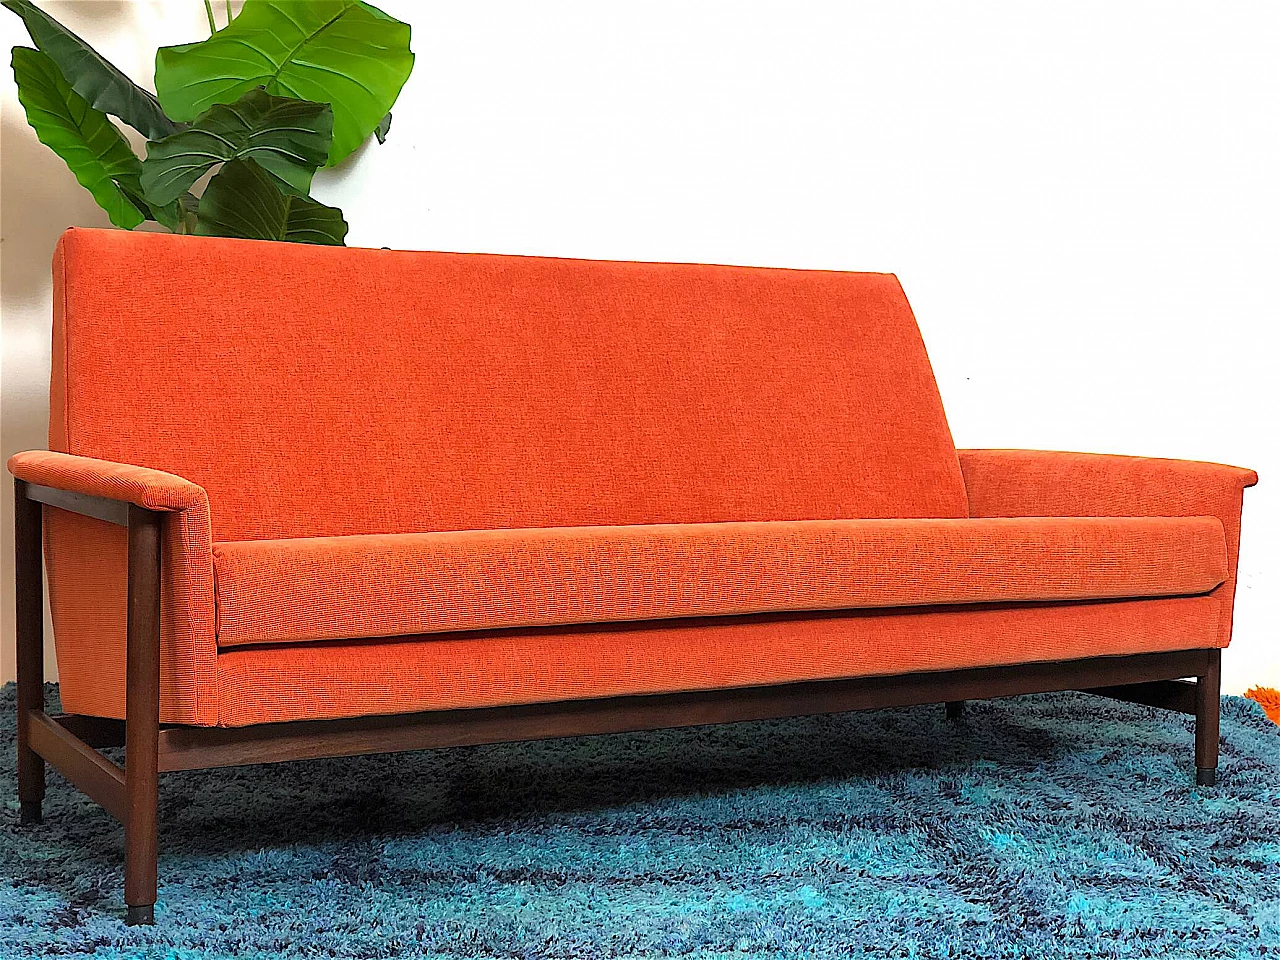 Sofa with orange fabric by Gigi Radice for Minotti, 1960s 2